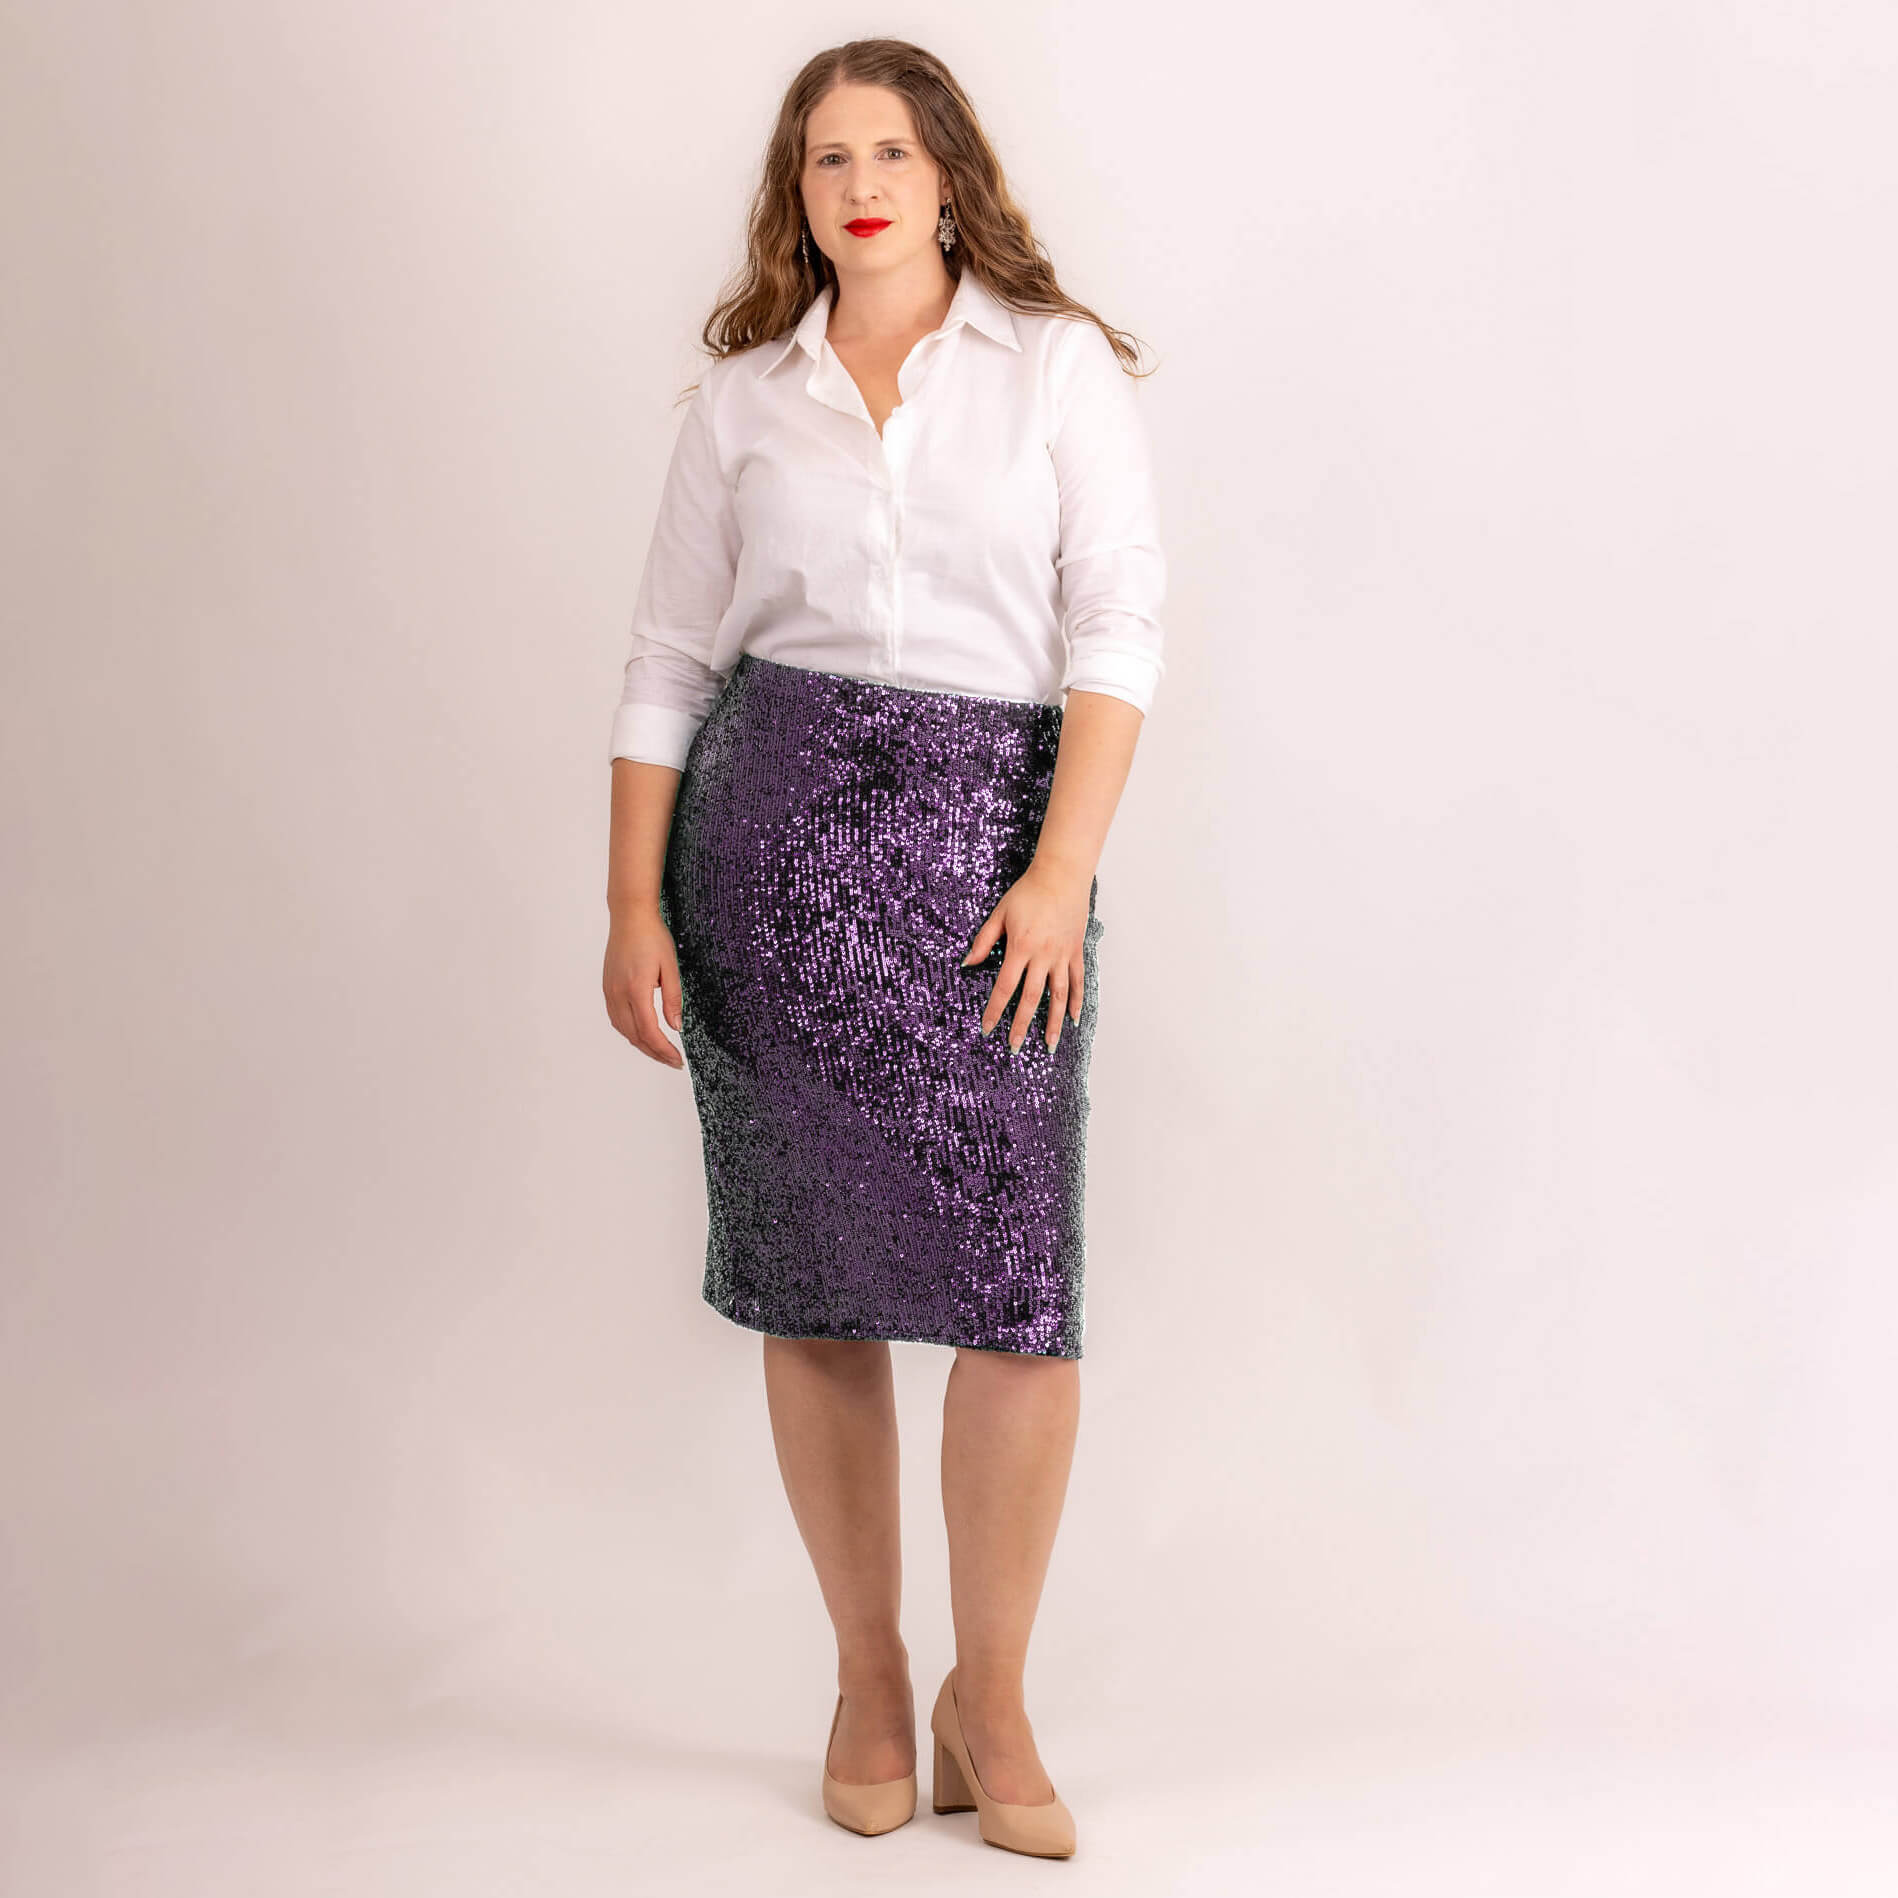 purple sequined stretch skirt worn by women